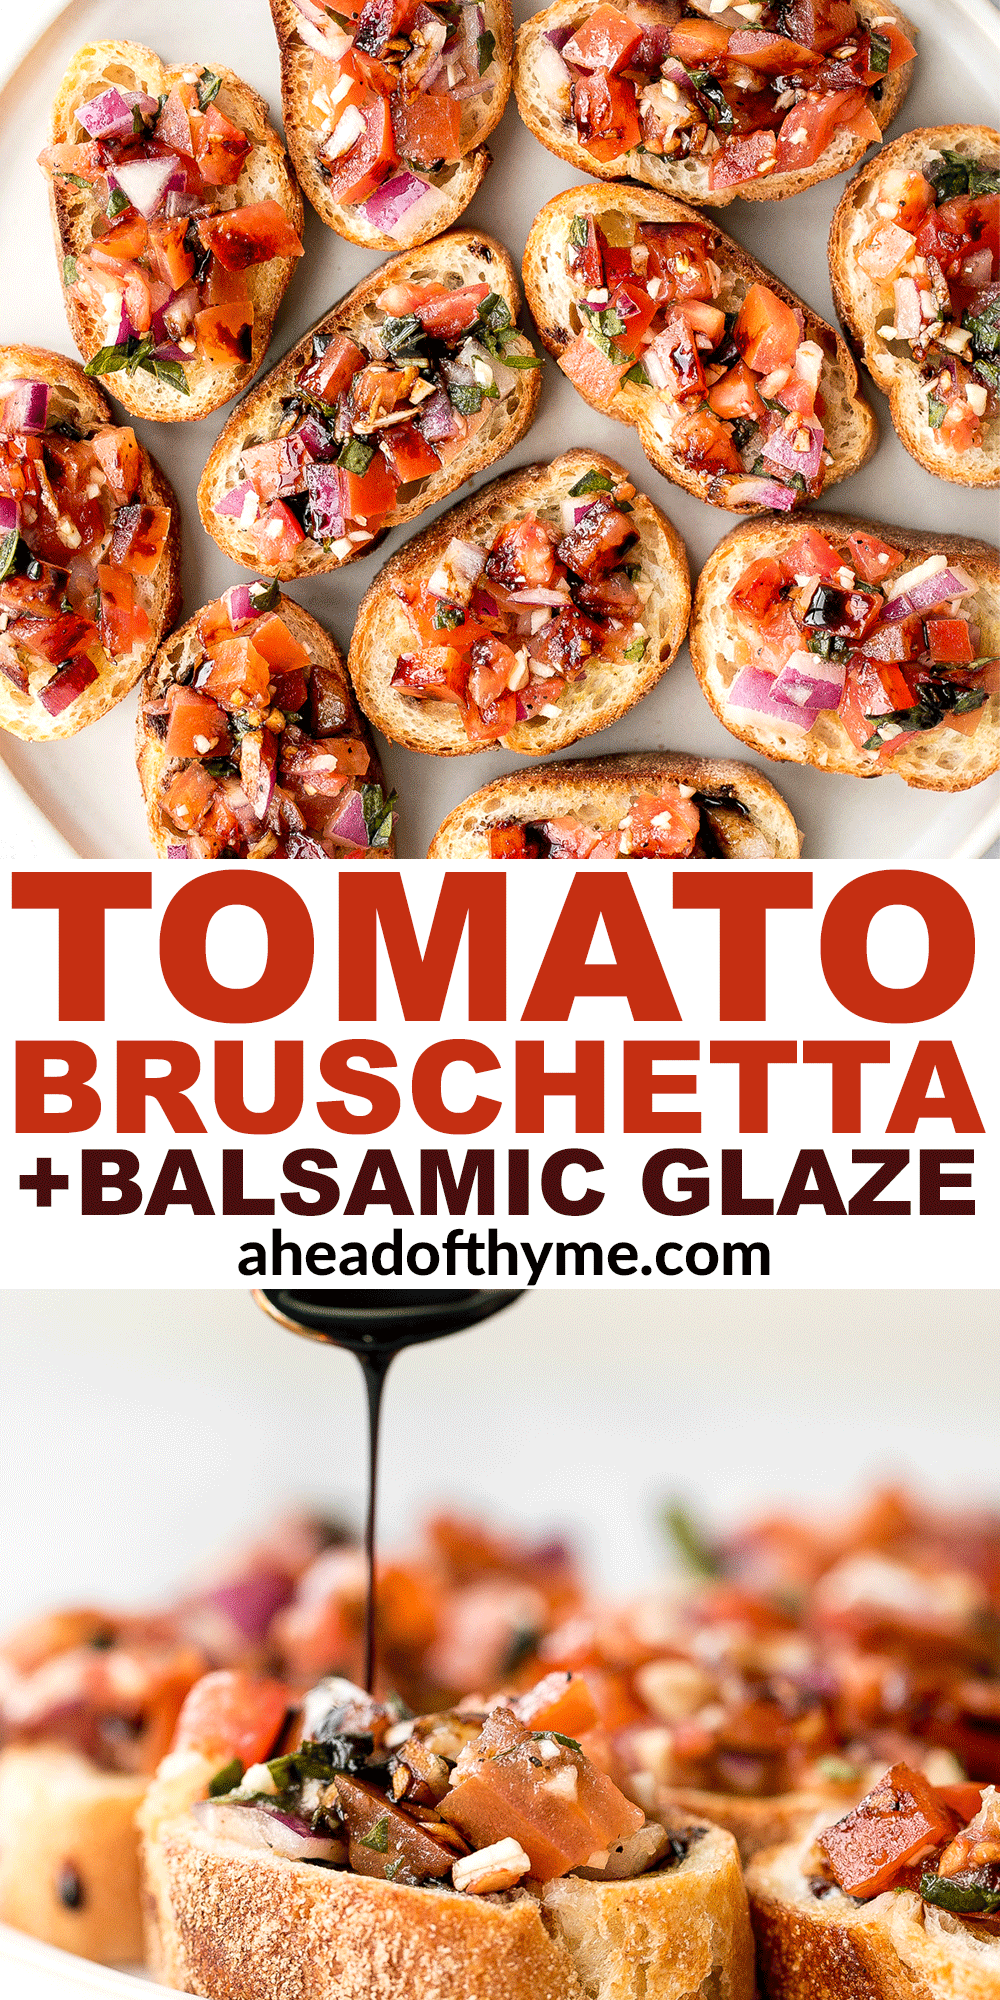 Tomato Bruschetta with Balsamic Glaze